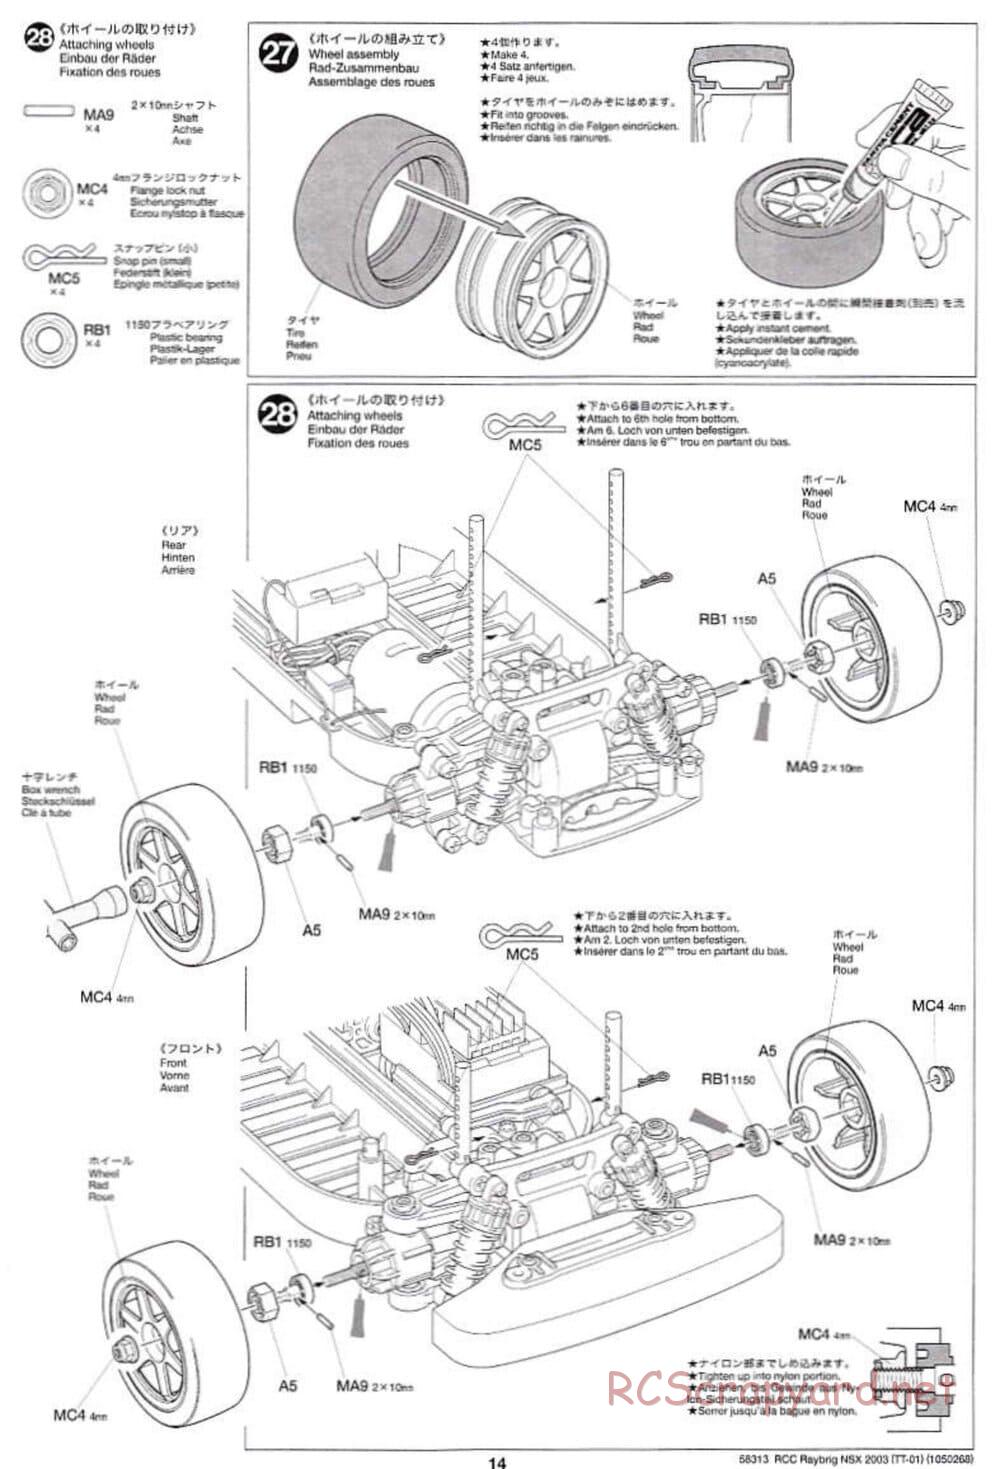 Tamiya - Raybrig NSX 2003 - TT-01 Chassis - Manual - Page 14